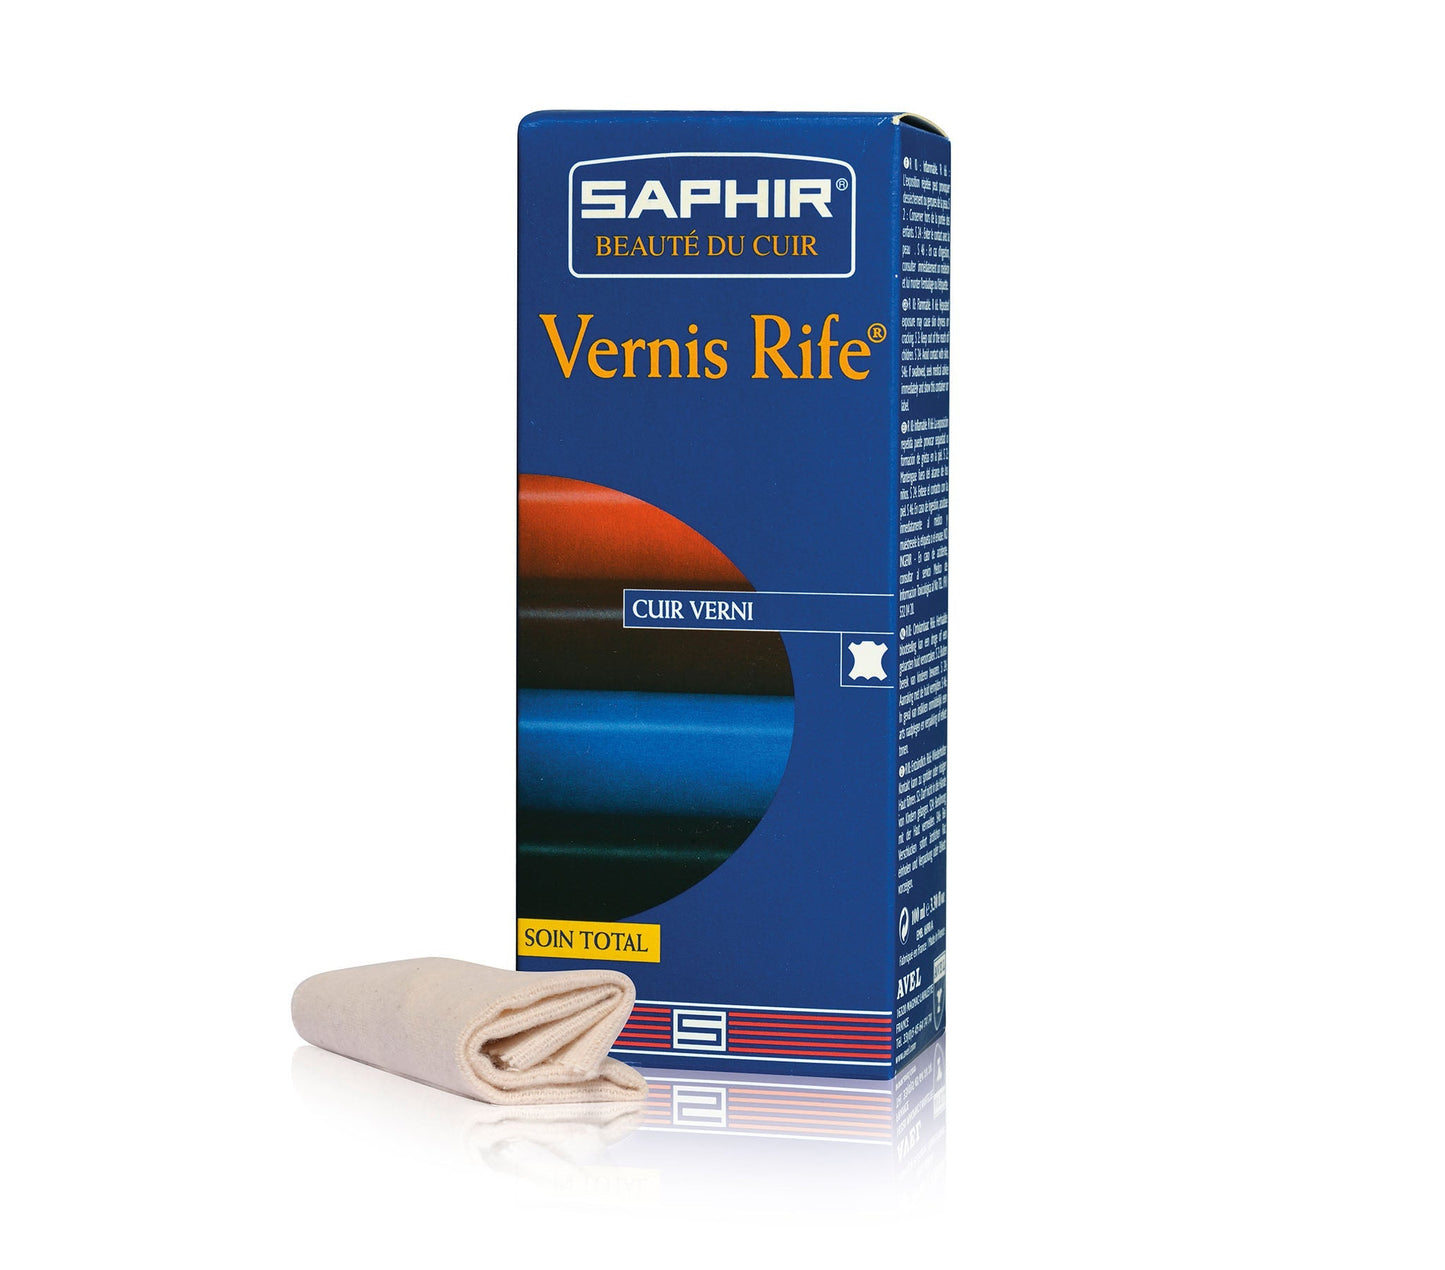 SAPHIR BEAUTE DU CUIR - VERNIS RIFE - BOTTLE & CLEANING CLOTH -100ML